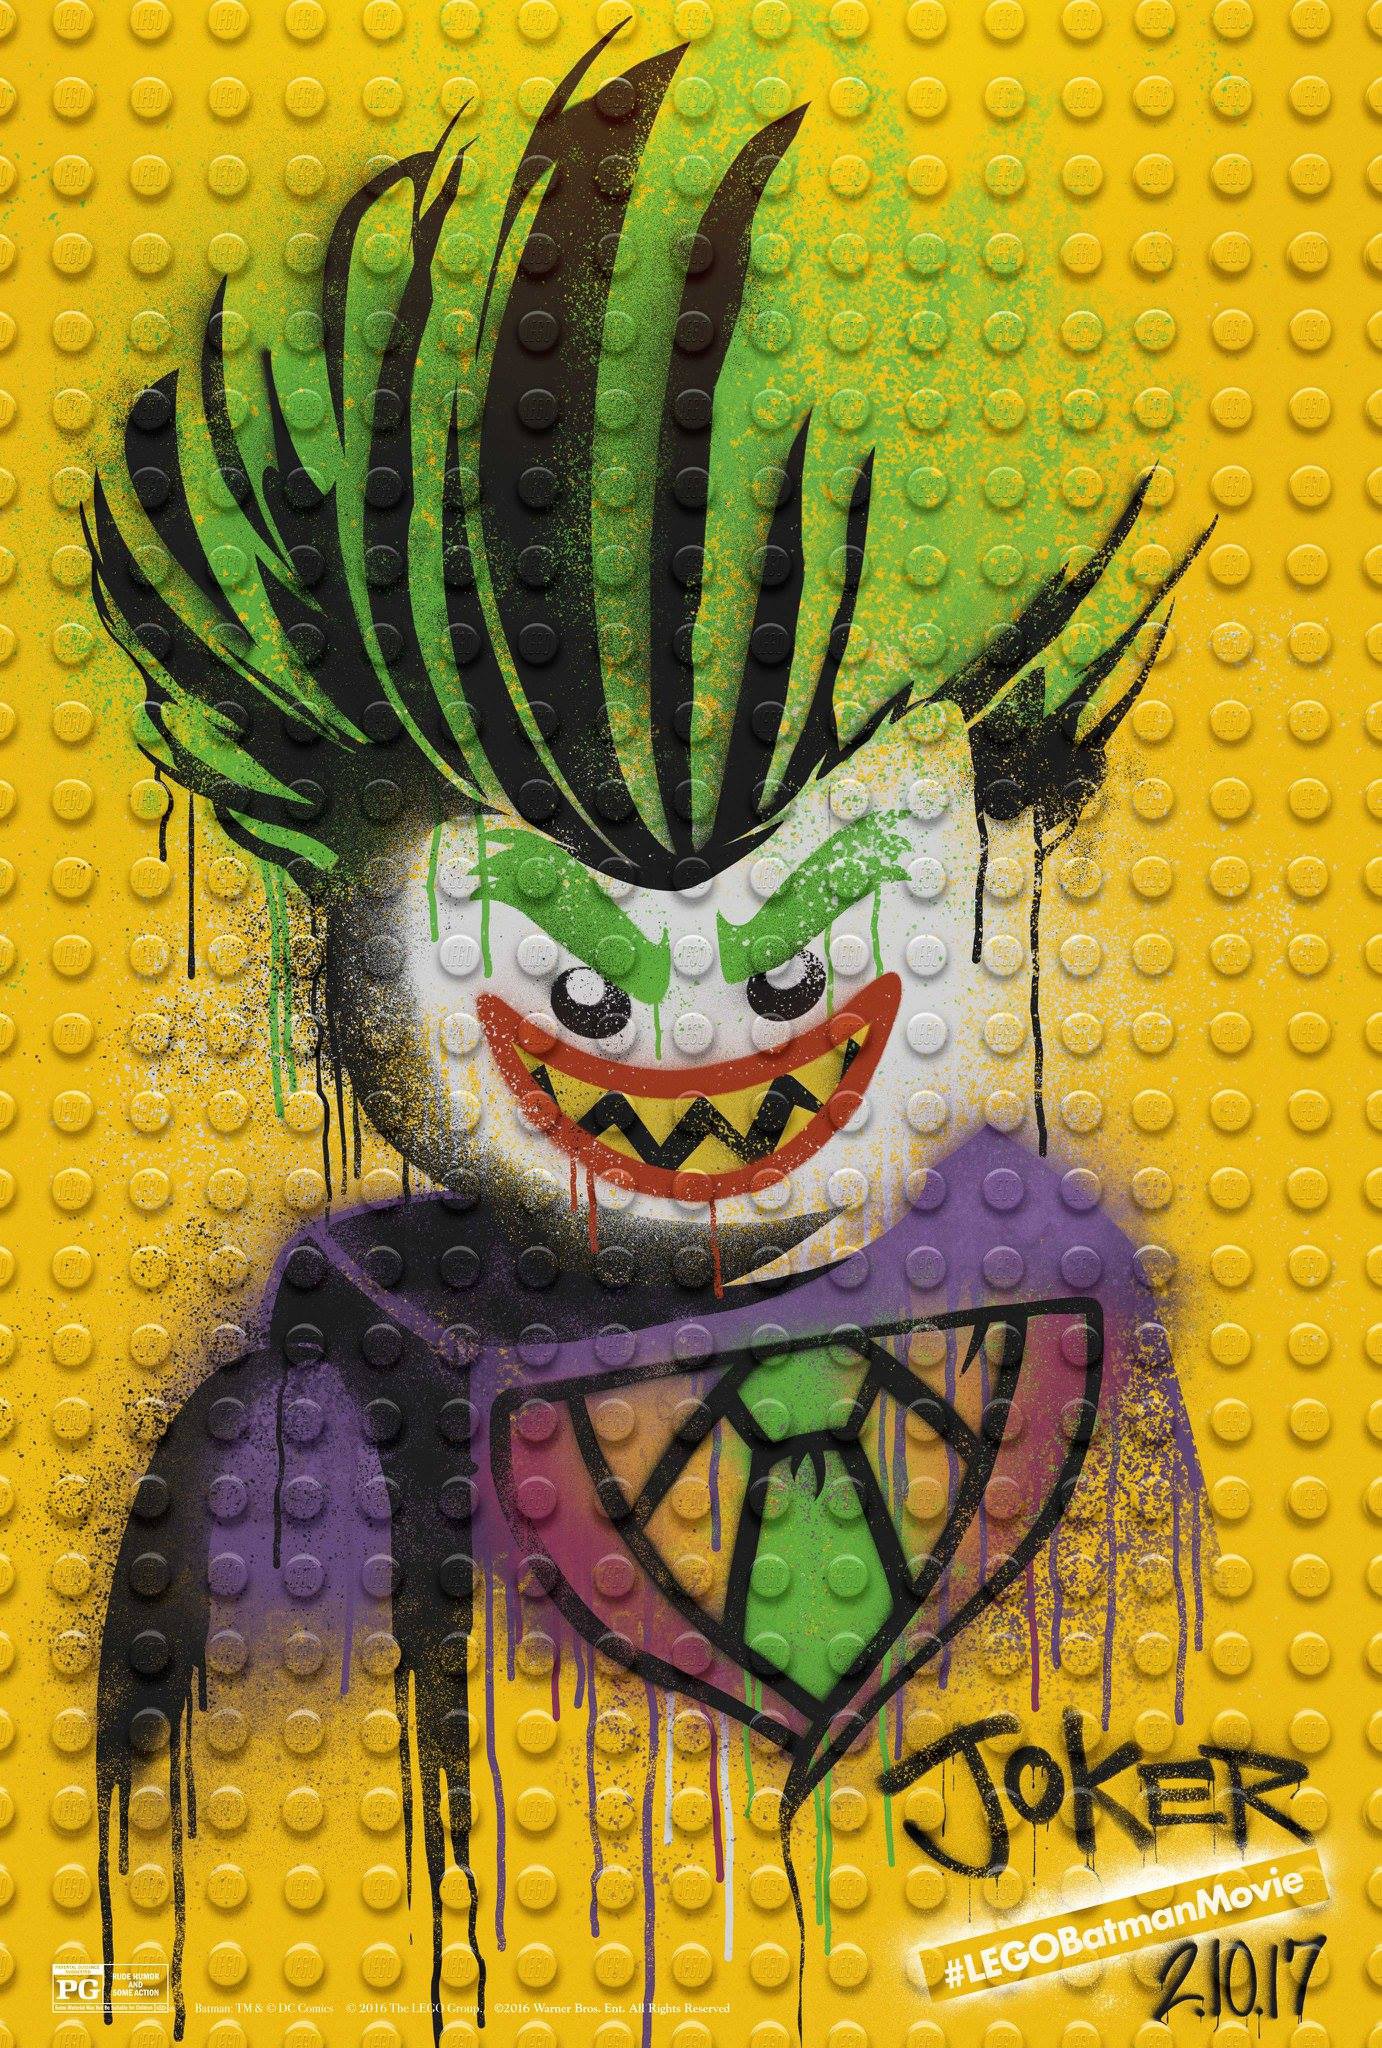 Mega Sized Movie Poster Image for The Lego Batman Movie (#16 of 27)